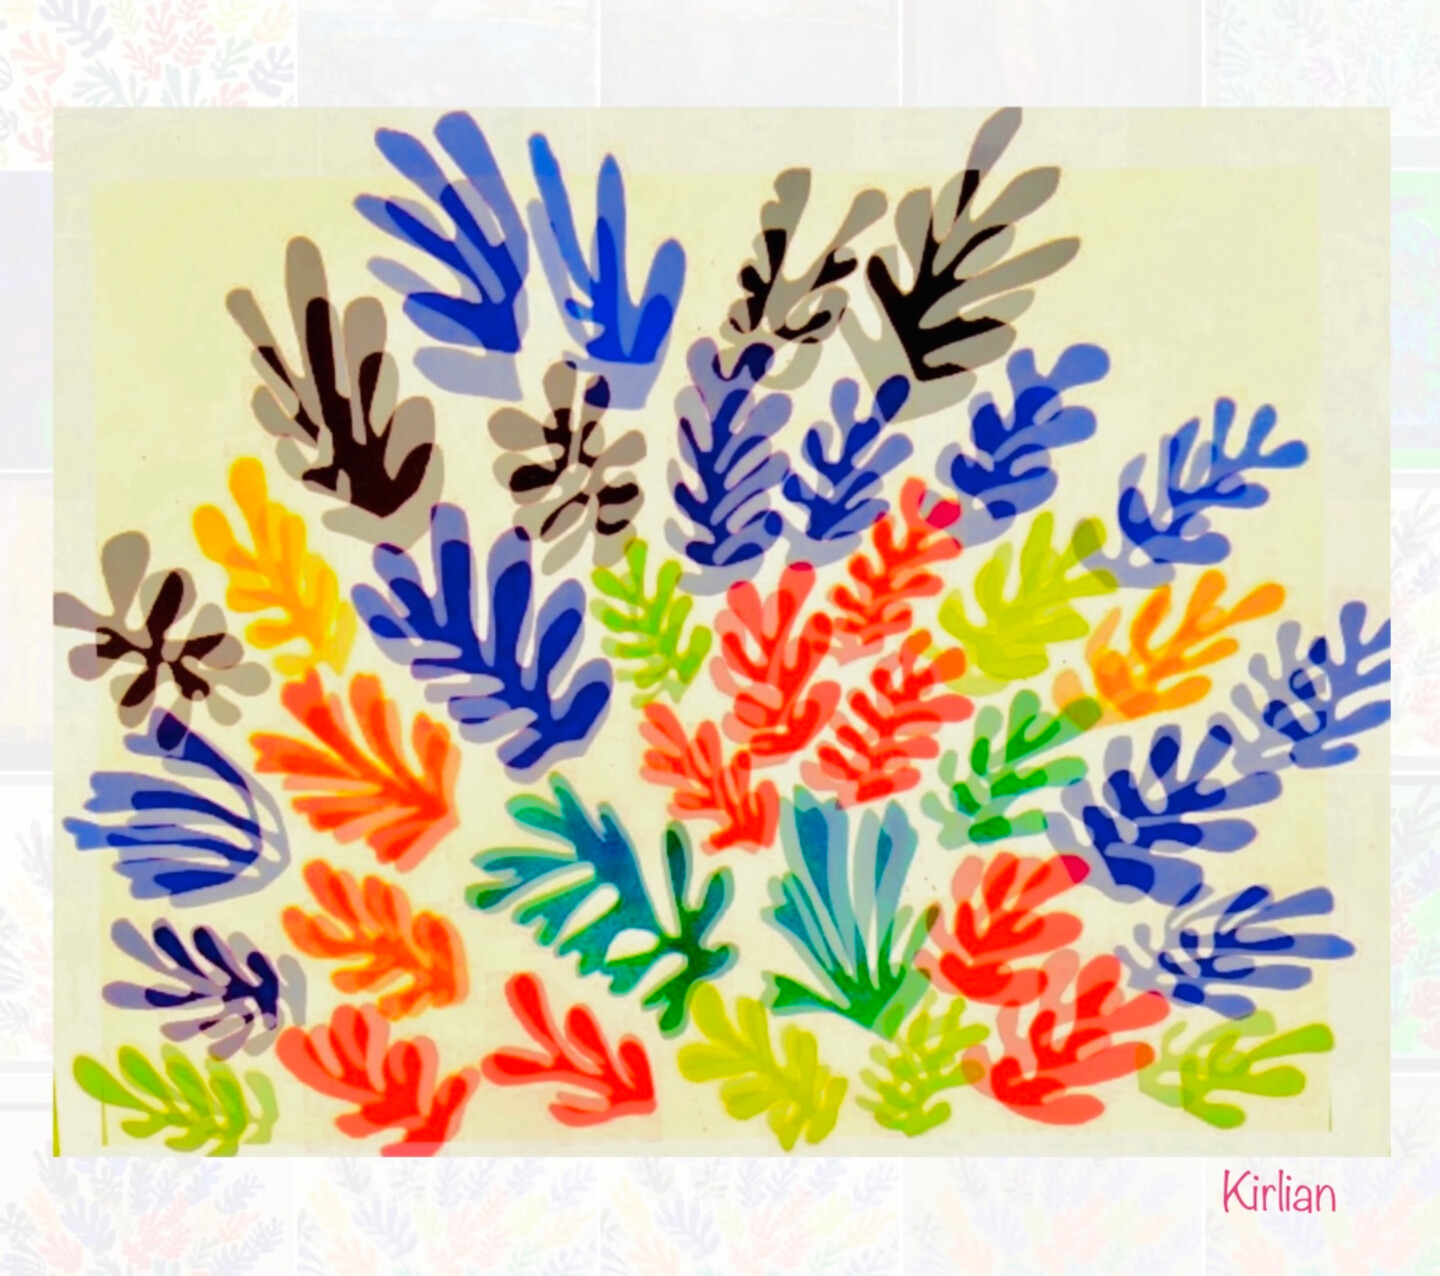 Kirlian - Matisse revisité/ Tableau Art Contemporain